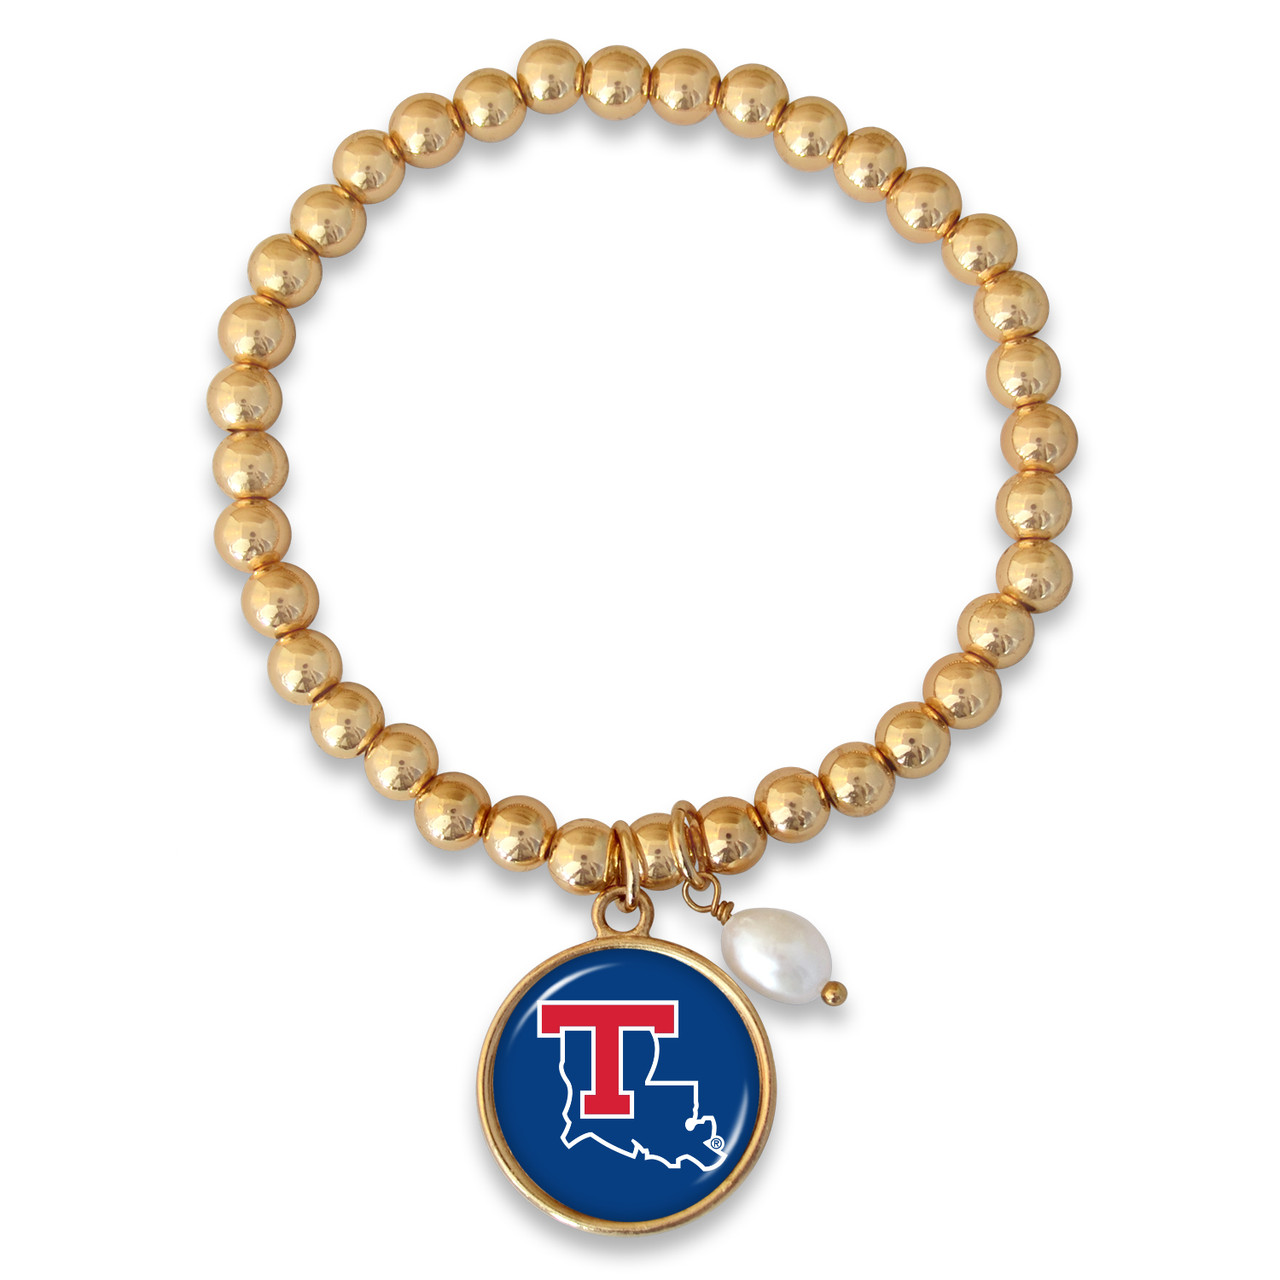 Louisiana Tech Bulldogs Bracelet - Diana